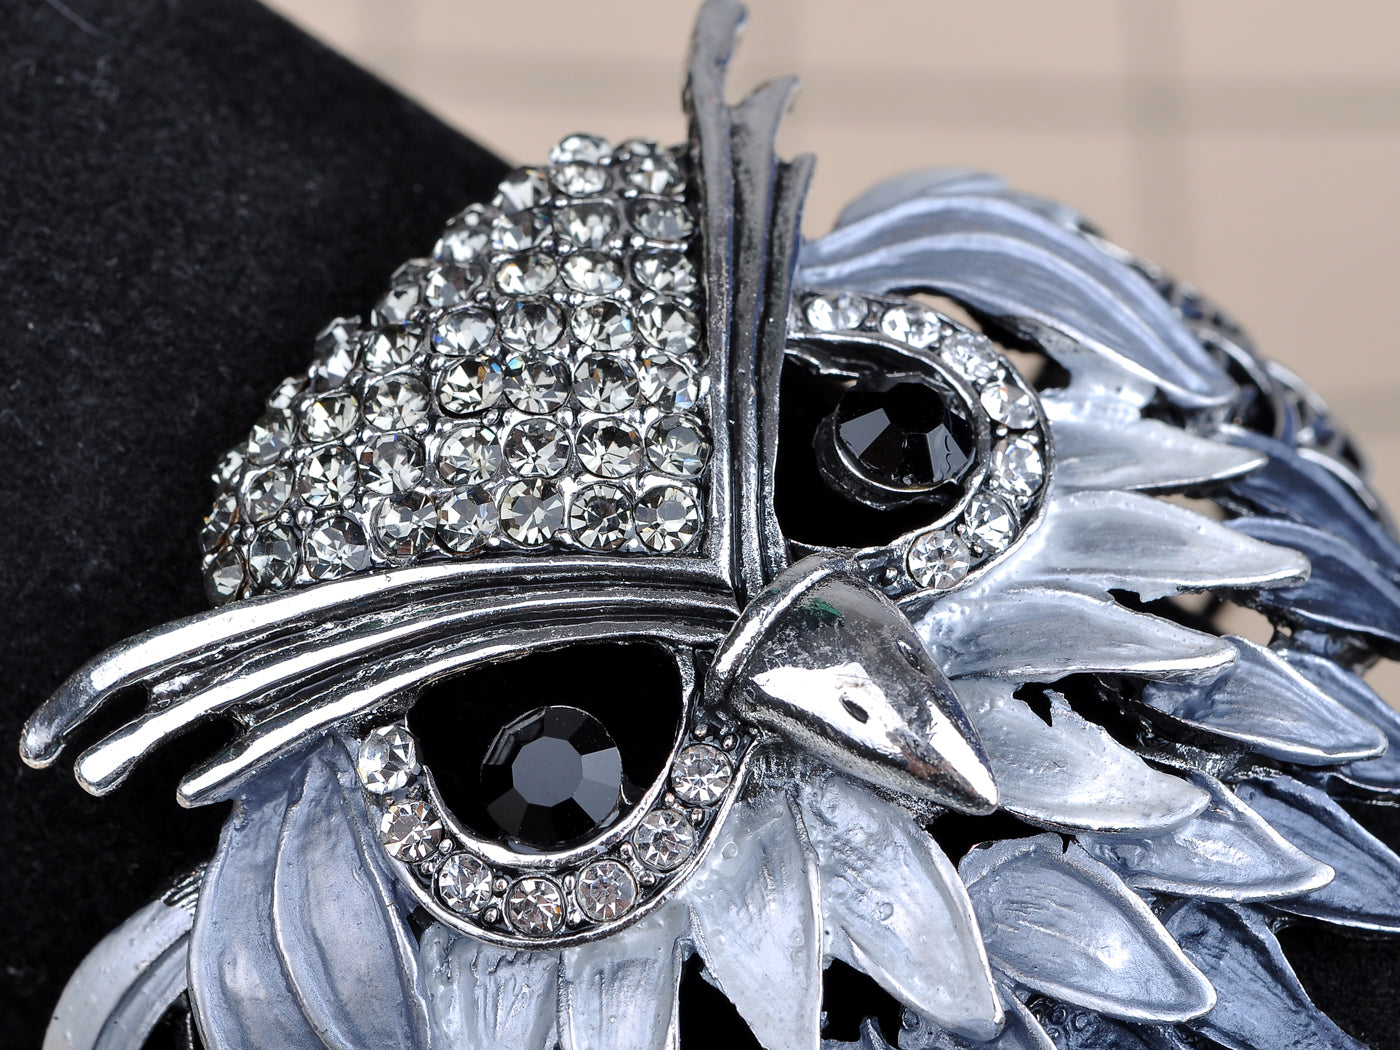 Ombre Grey Wise Owl Bird Face Head Bangle Bracelet